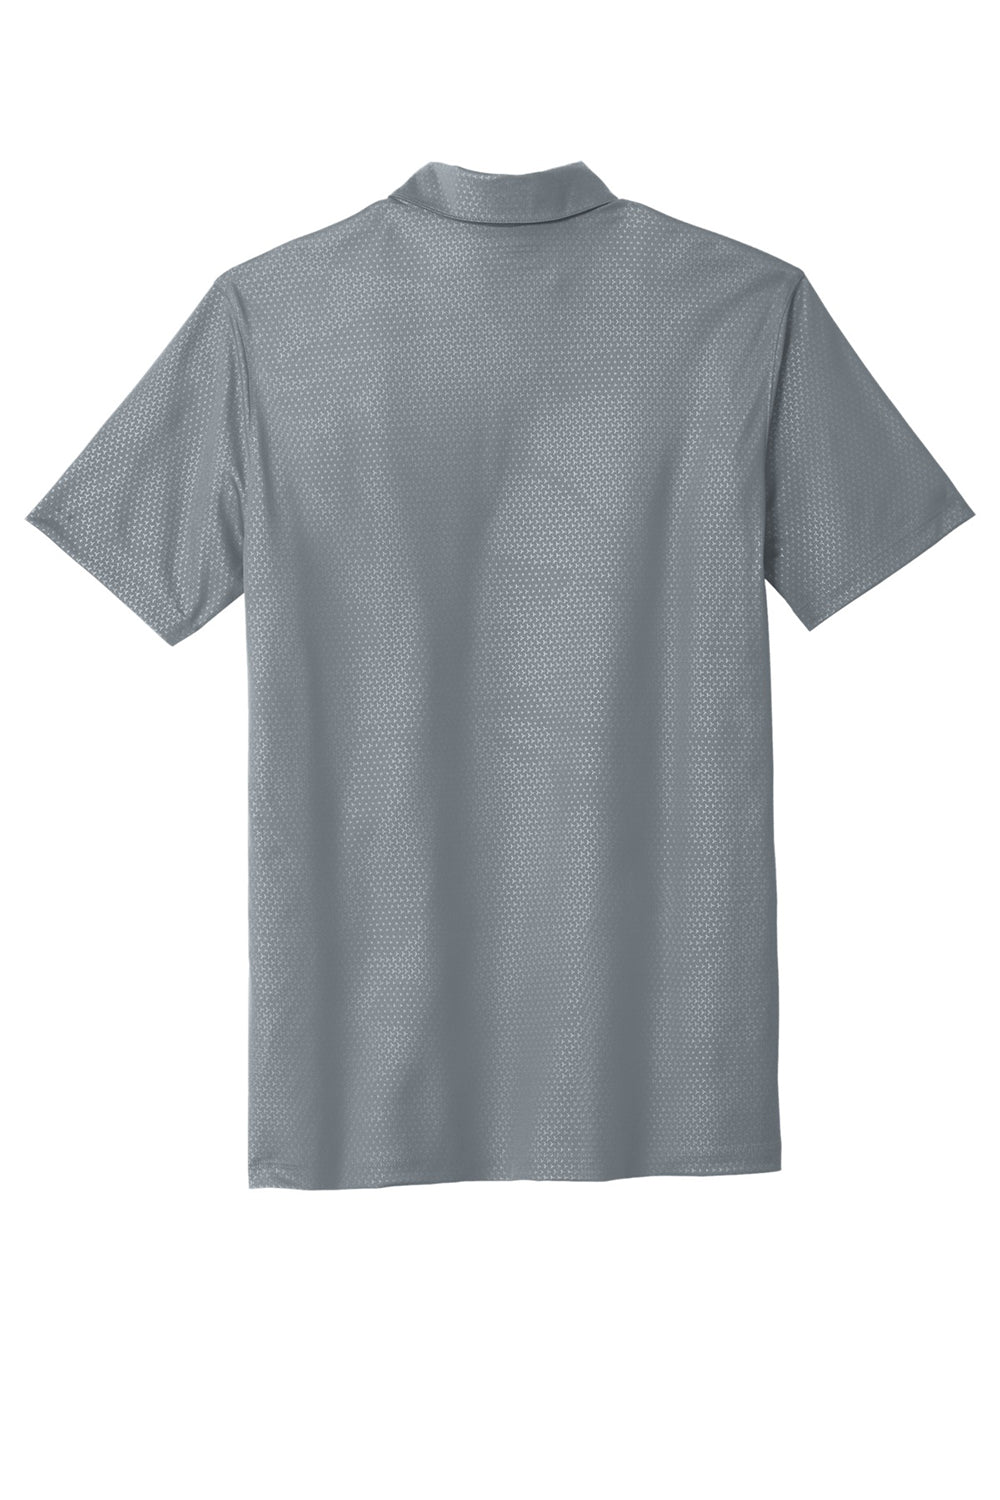 Nike 838964 Mens Dri-Fit Moisture Wicking Short Sleeve Polo Shirt Cool Grey Flat Back